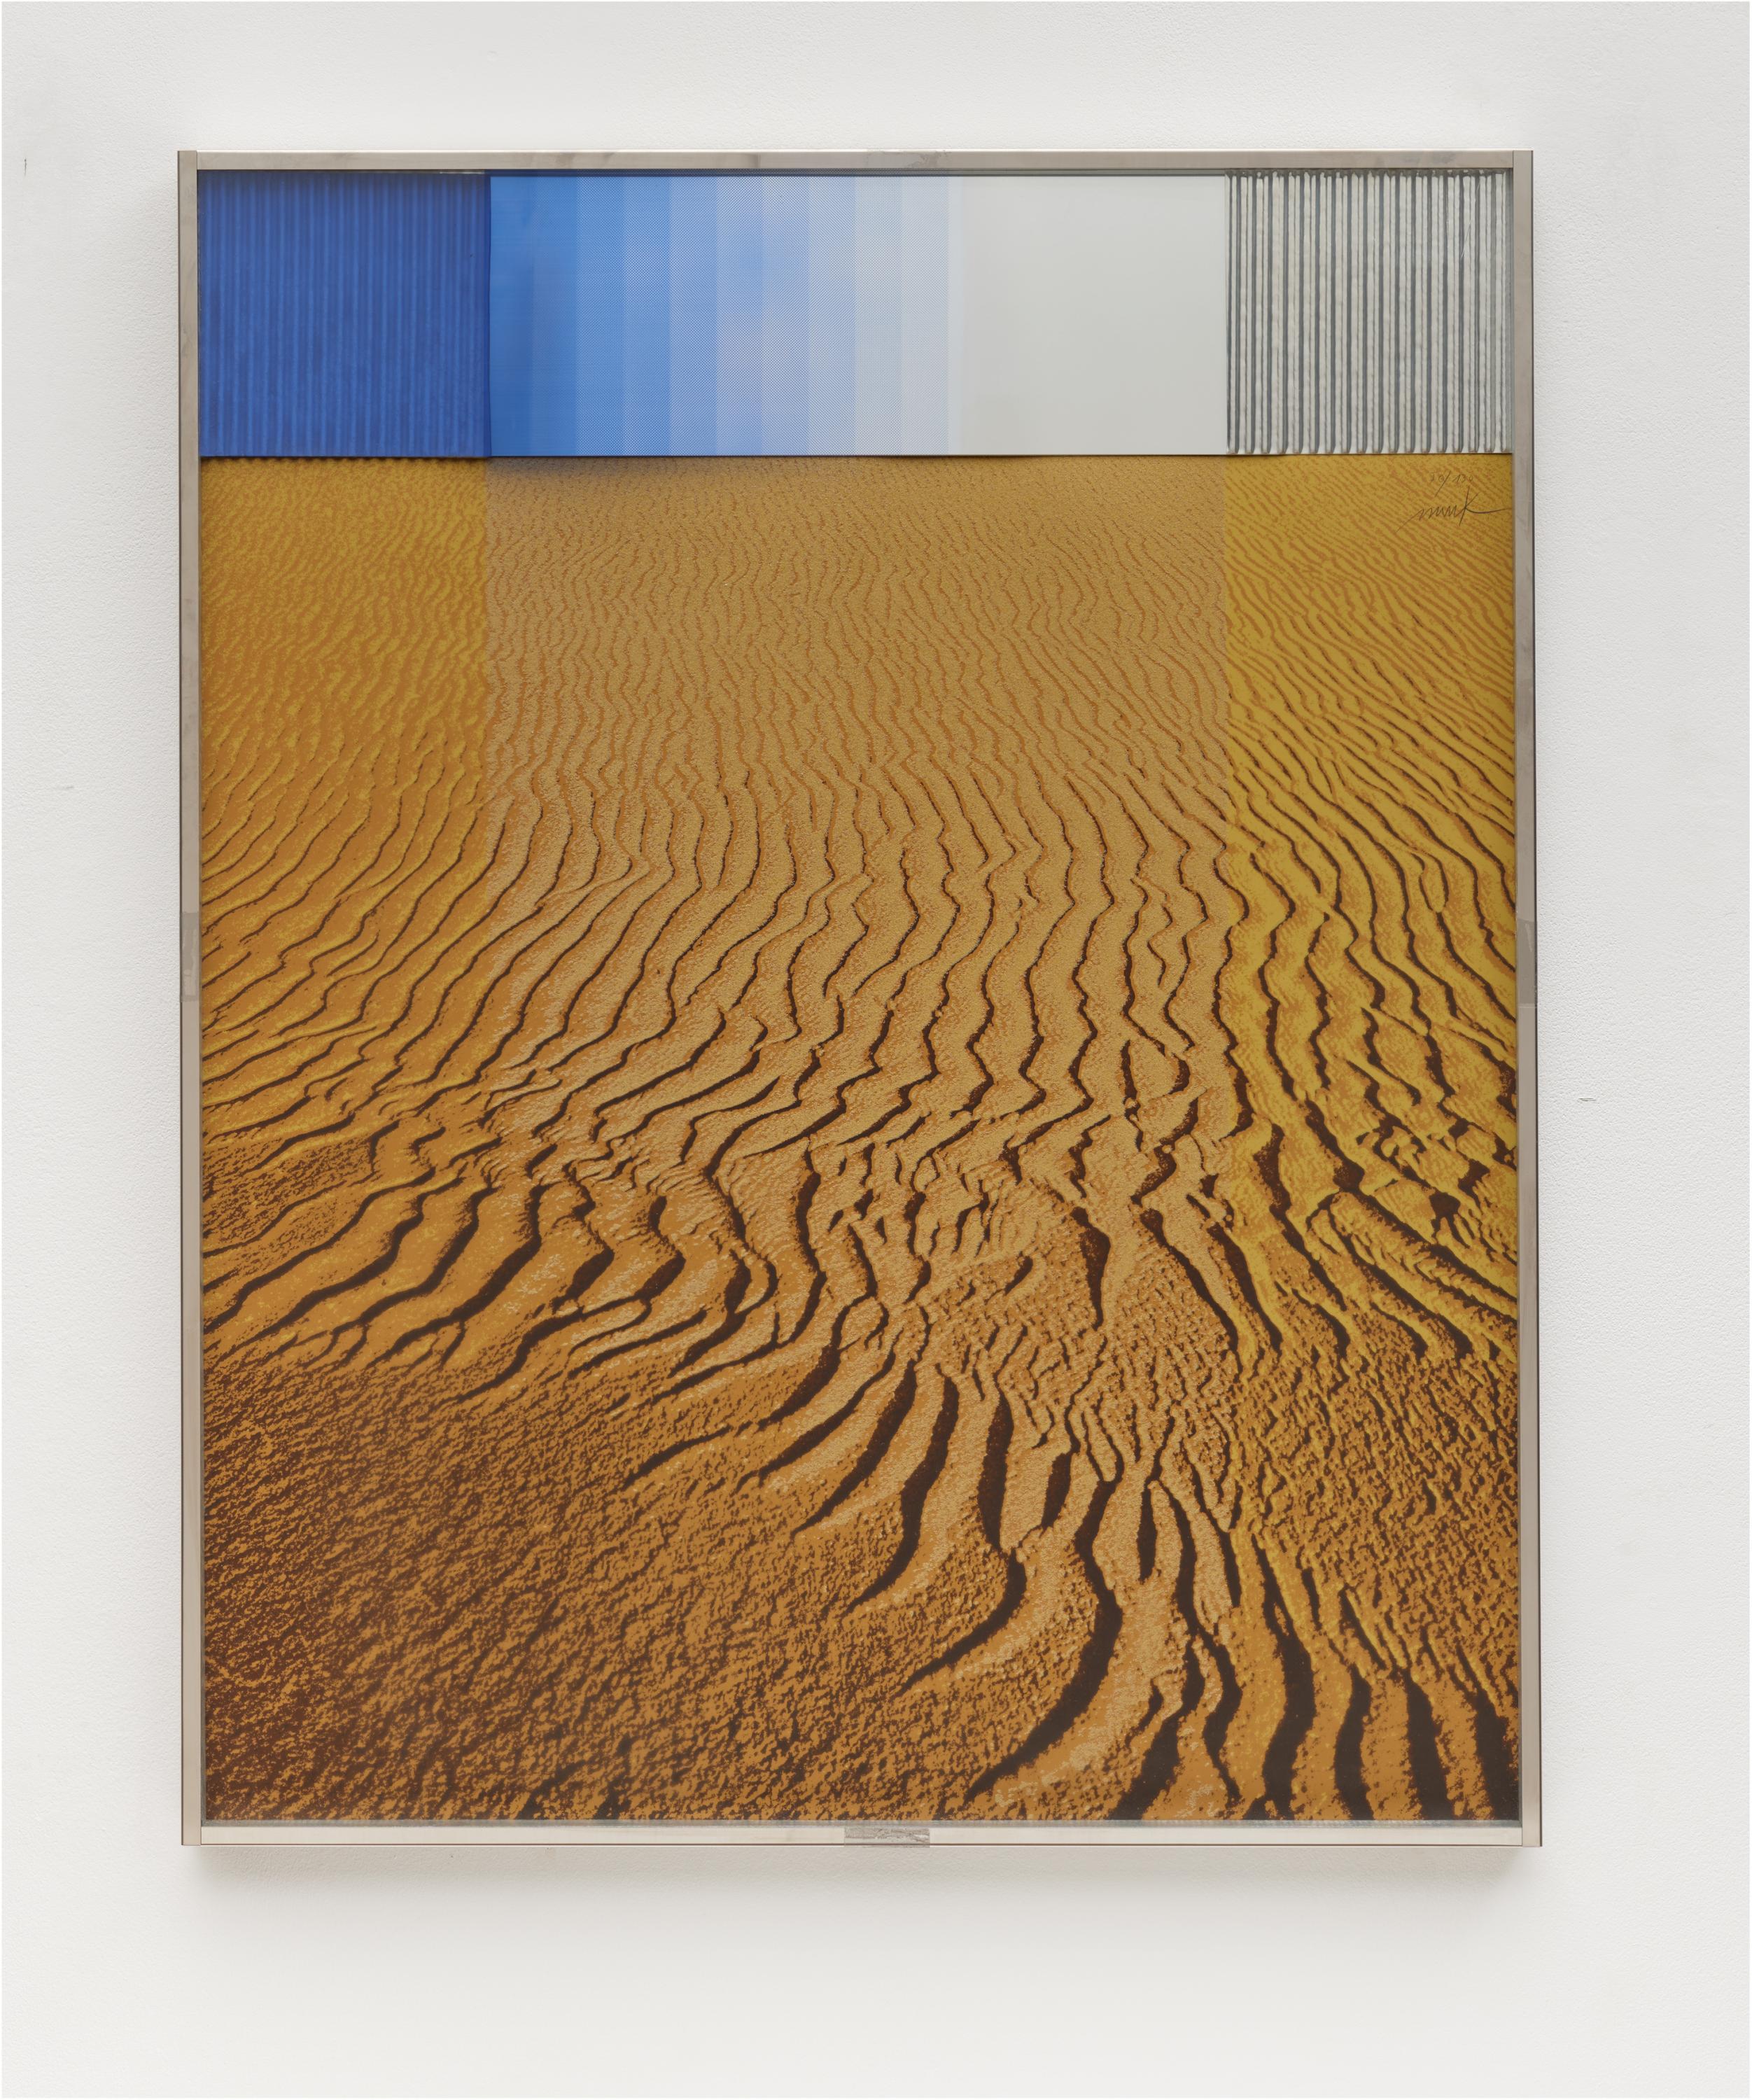 Heinz Mack: Sahara-Edition - Image 18 of 25